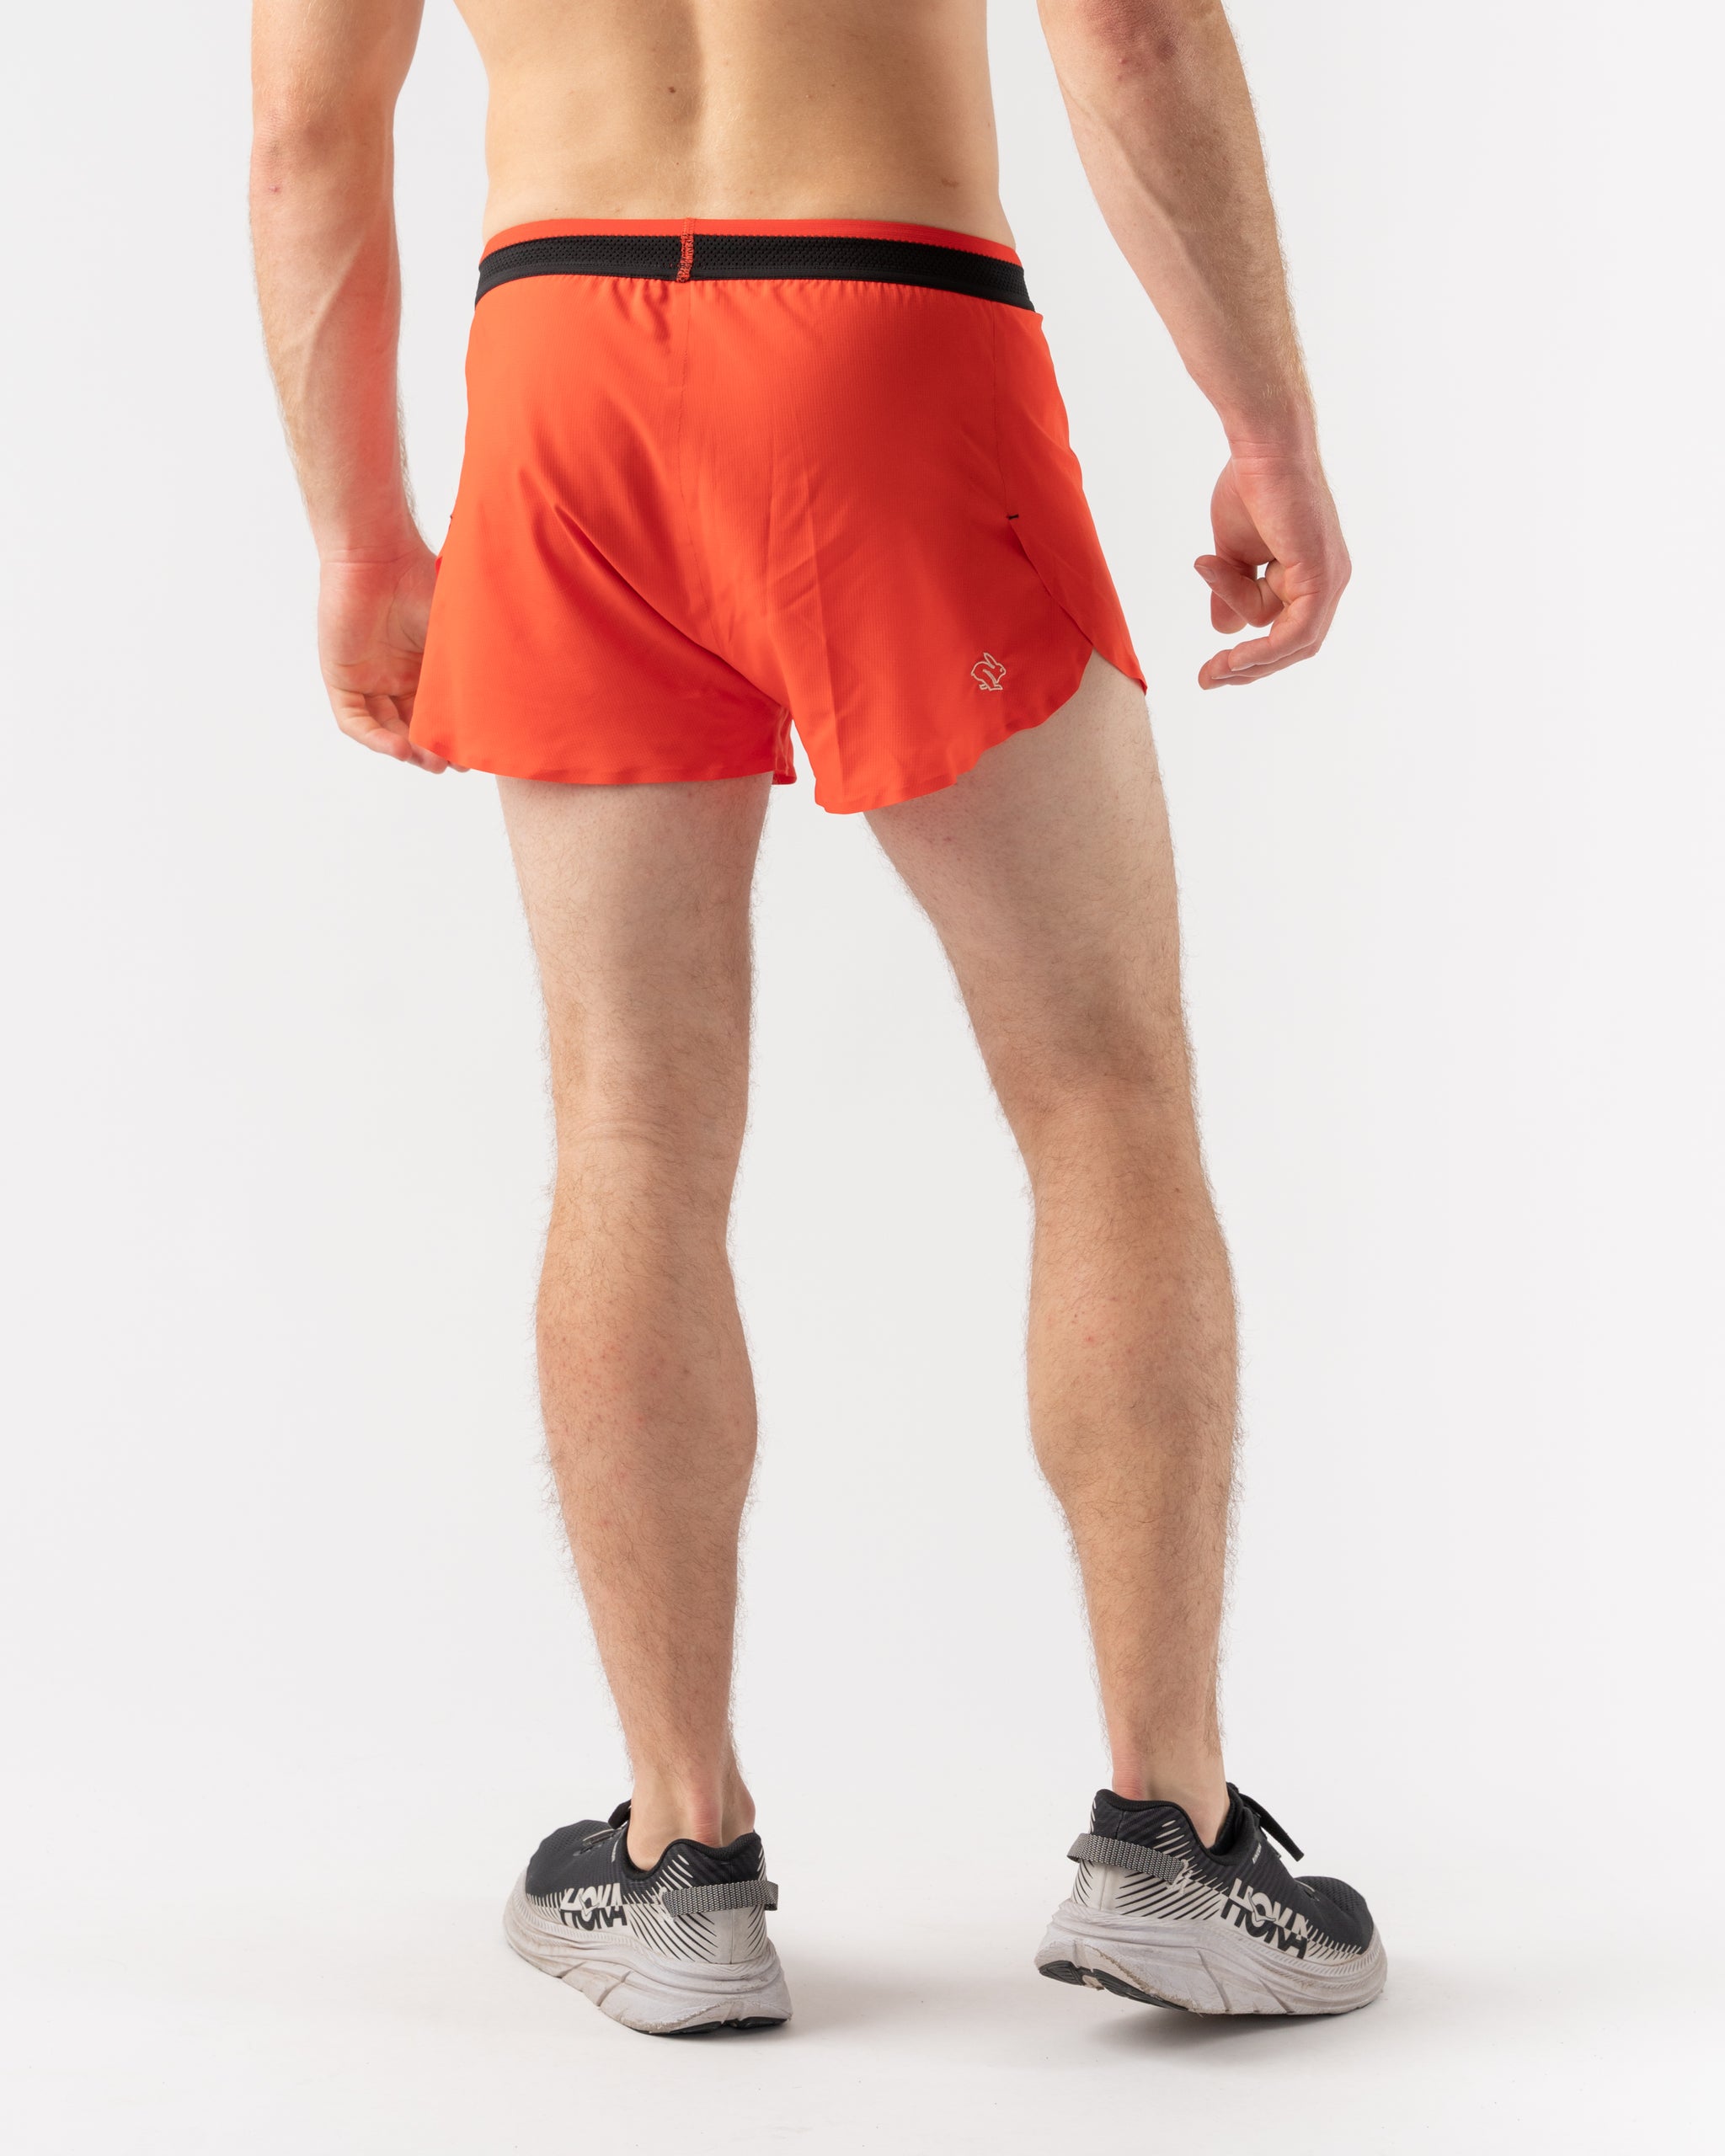 Men's Running Shorts - Shorteez 2